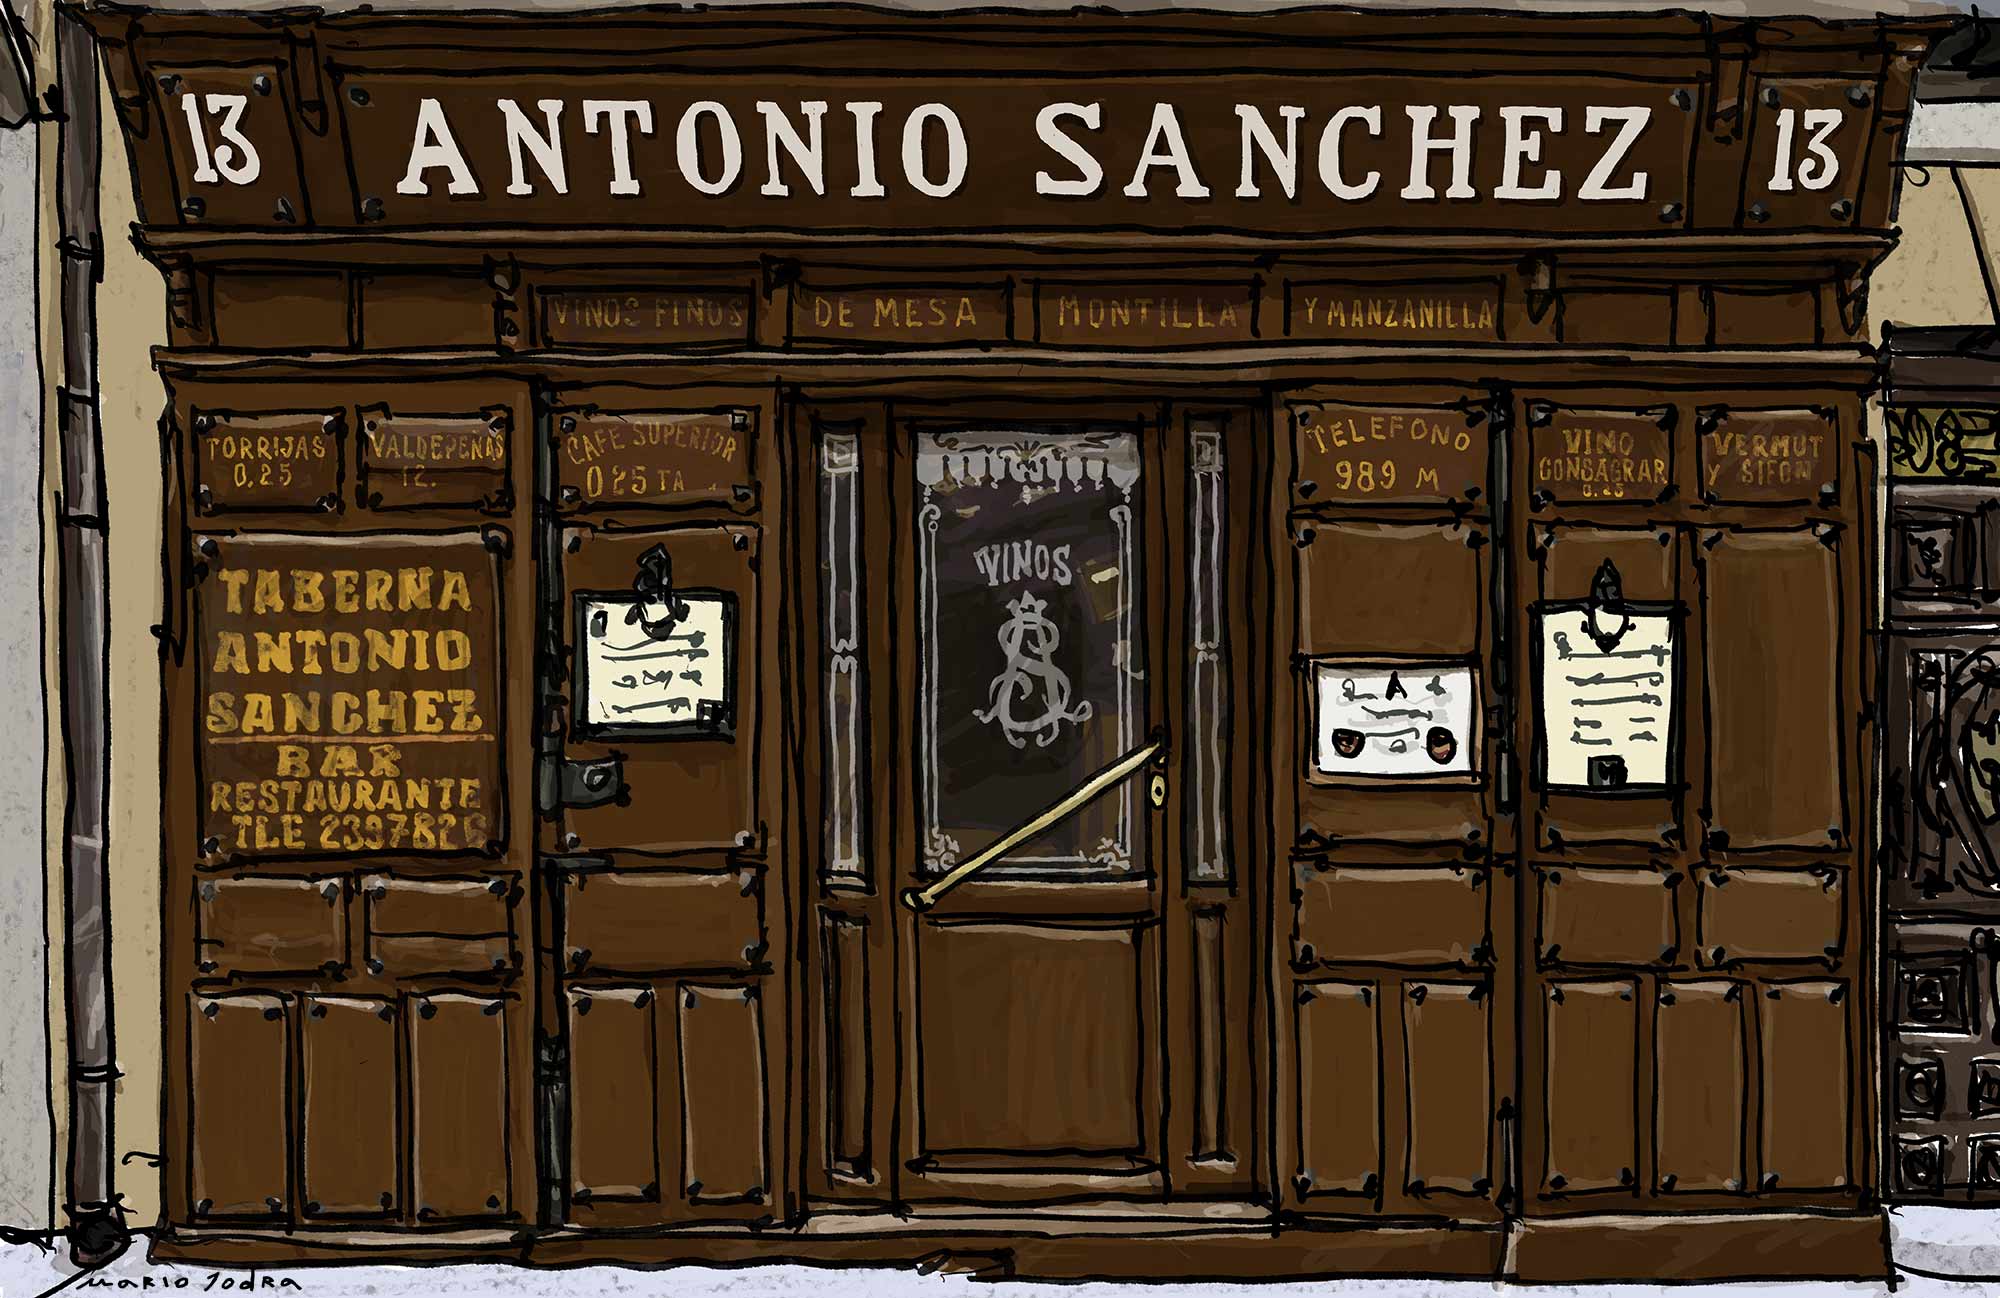 Mario Jodra illustration Art - Taberna de Antonio Sánchez- Madrid tavern. Since 1830